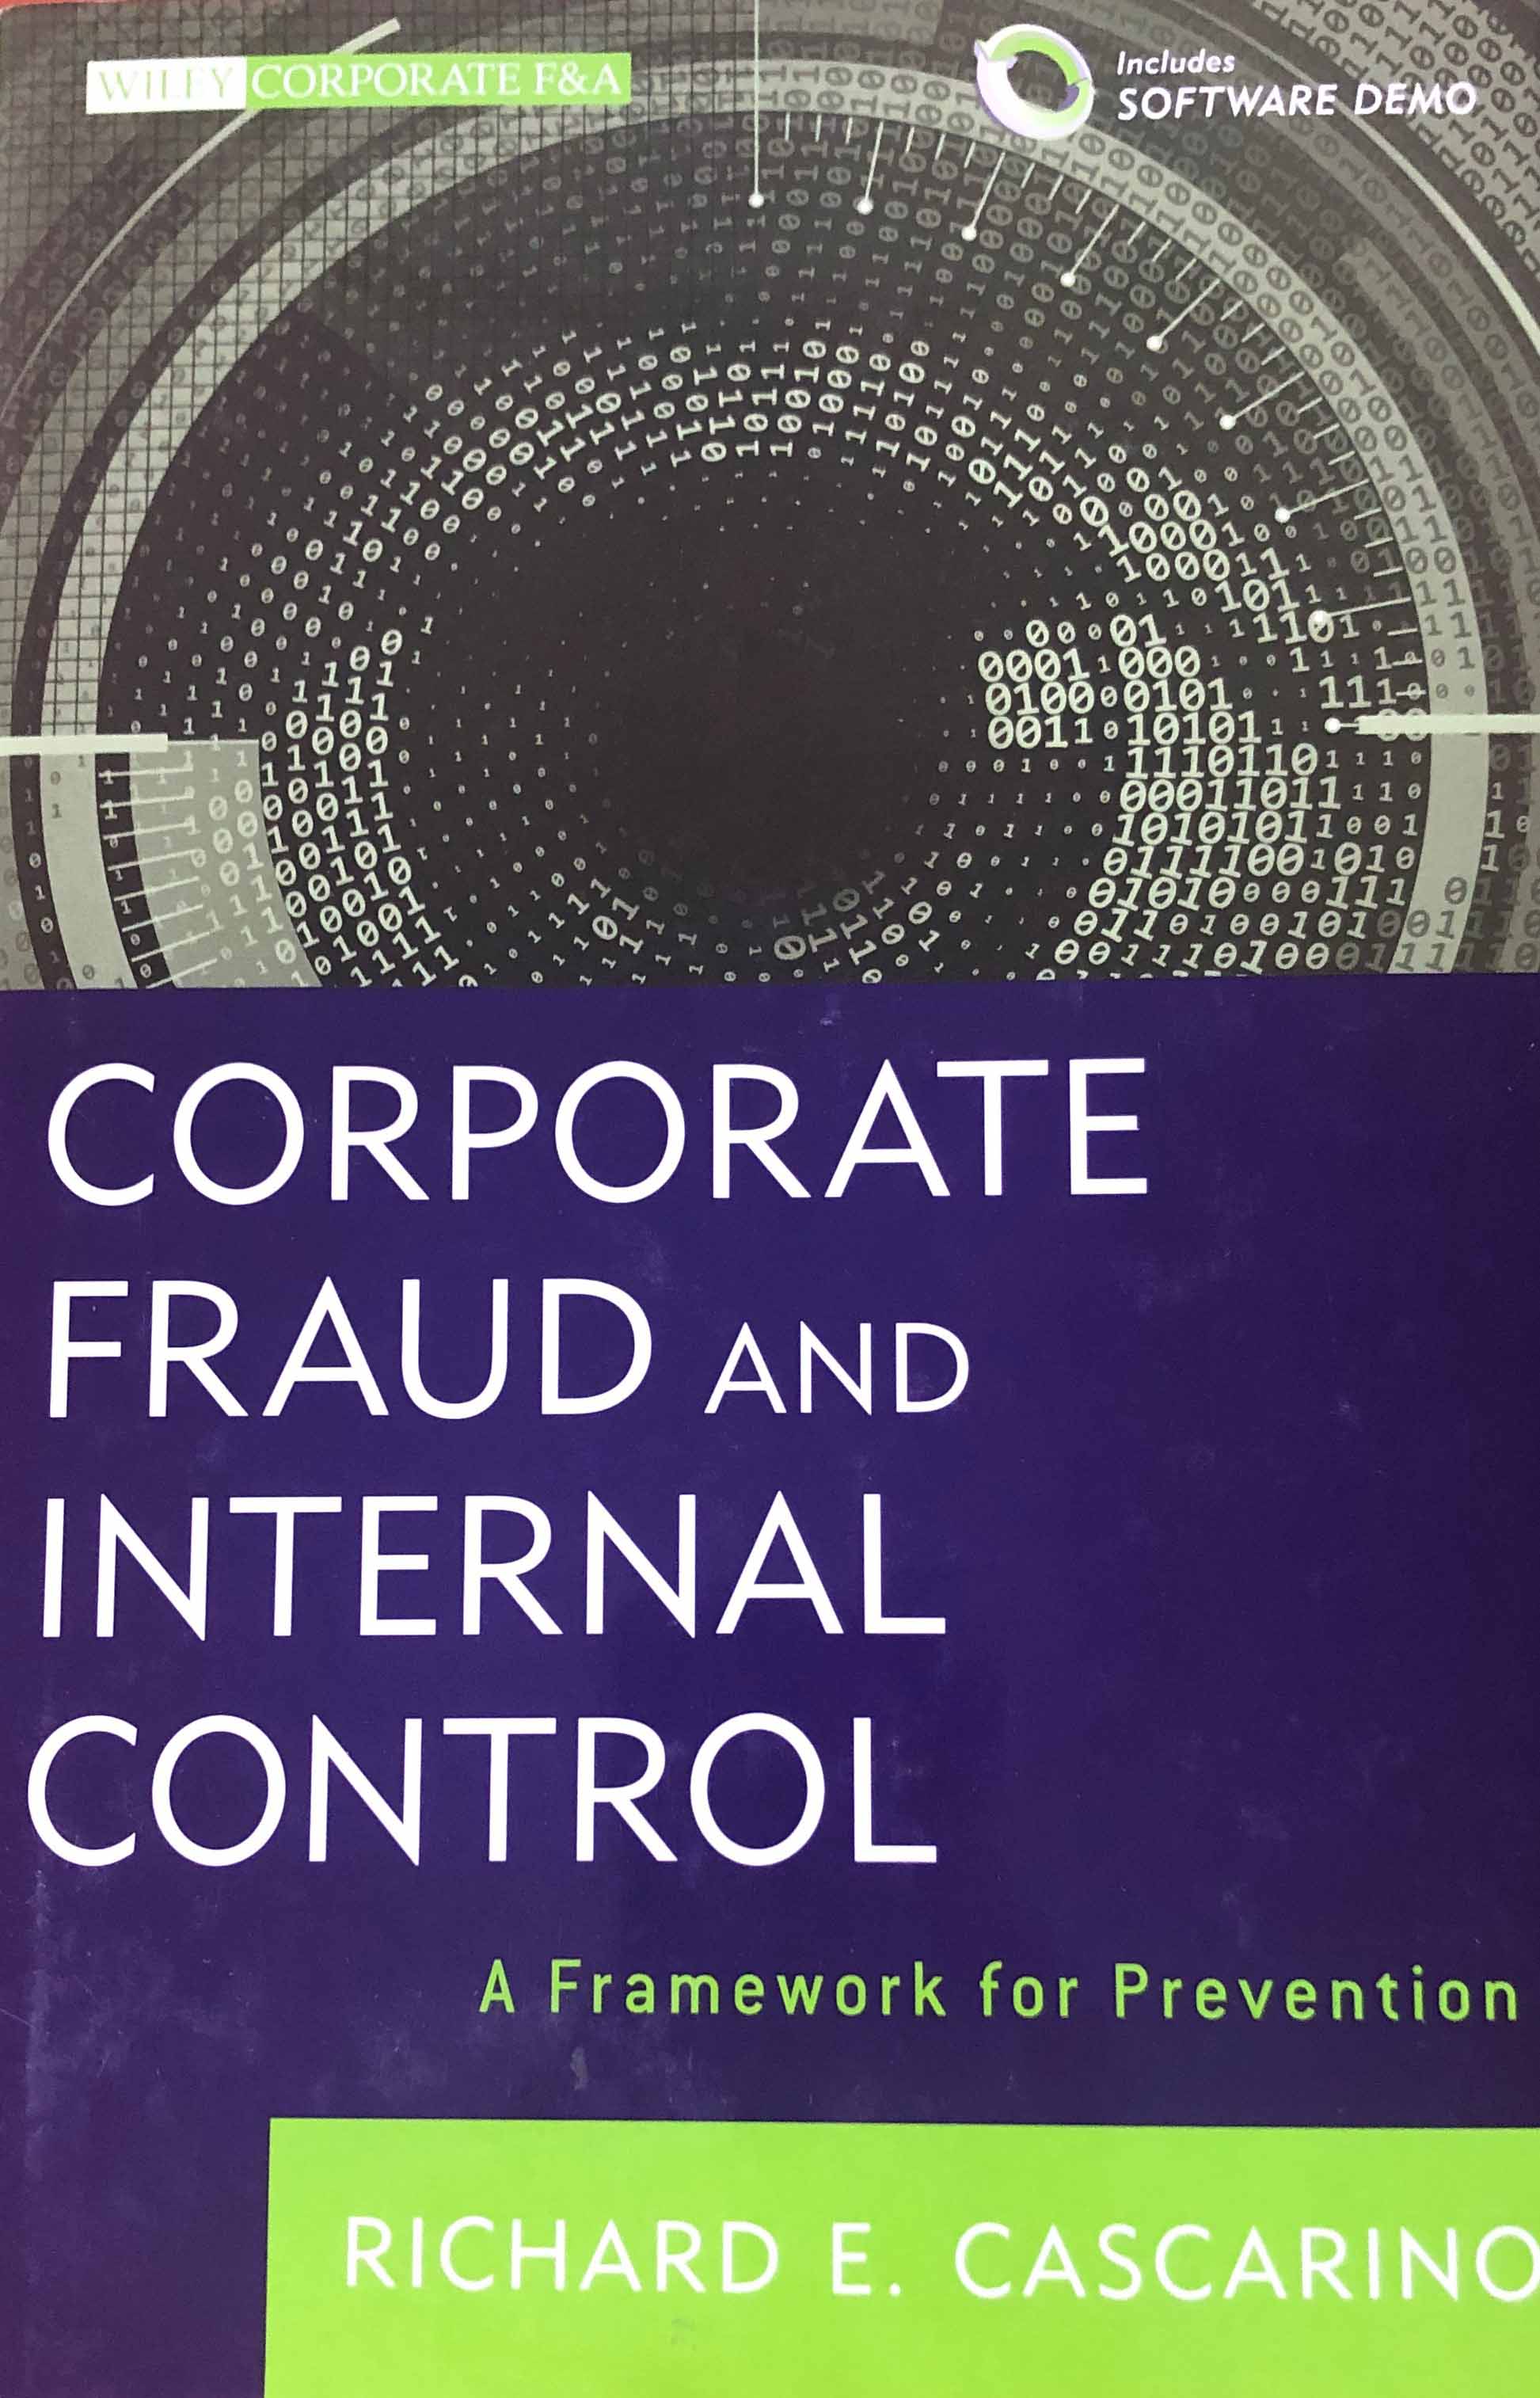 Description Corporate Fraud and Internal Control: A Framework for Prevention